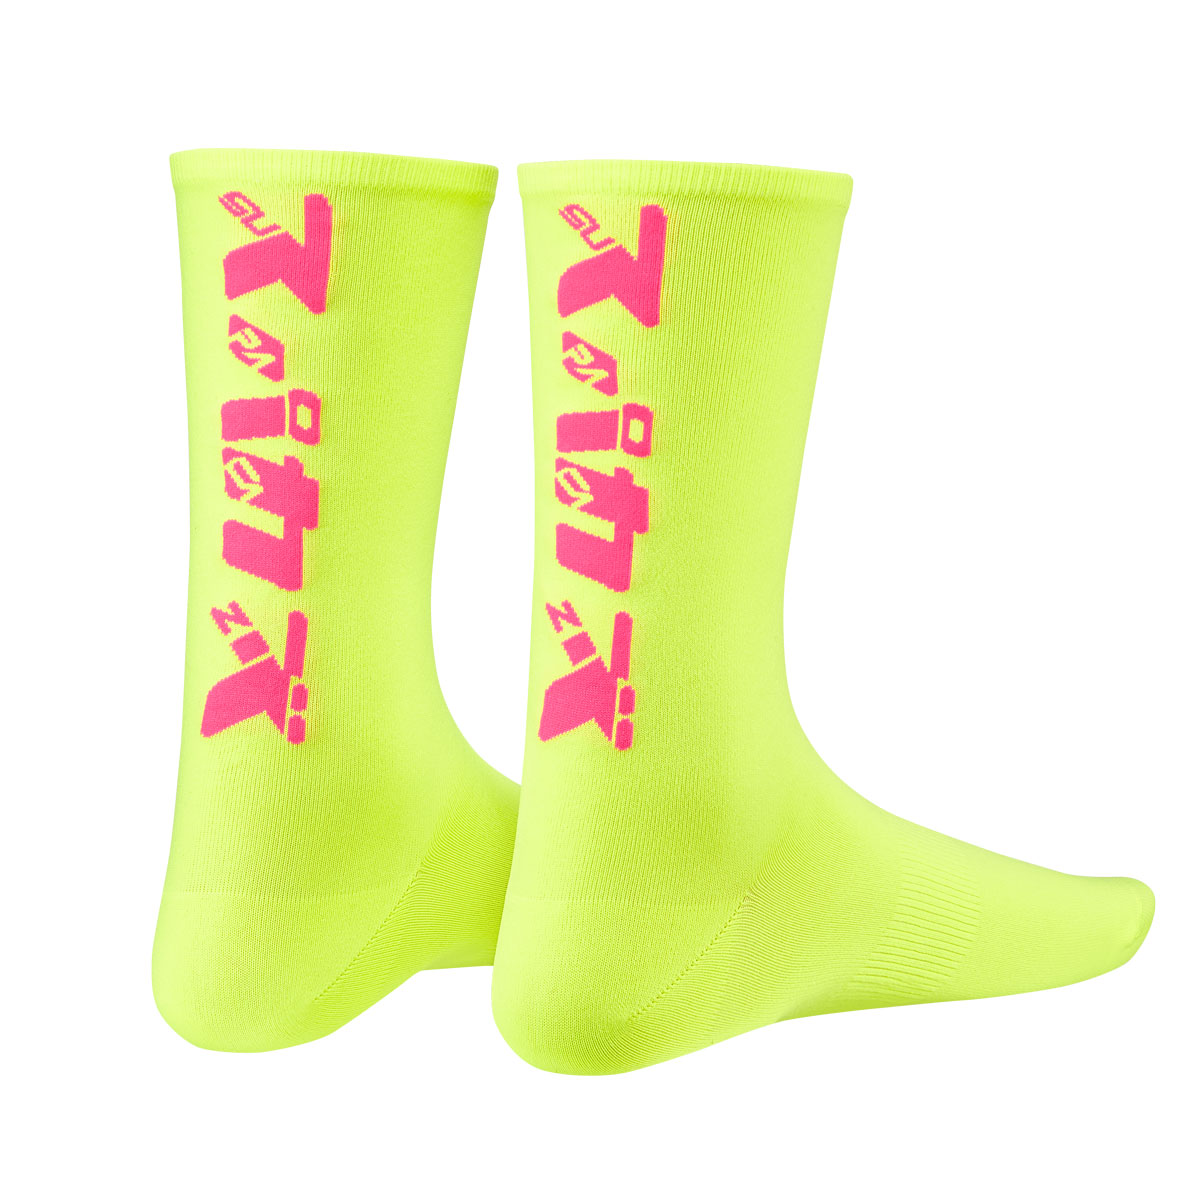 Socks - Katakana - Neon Yellow and Neon Pink - L/XL